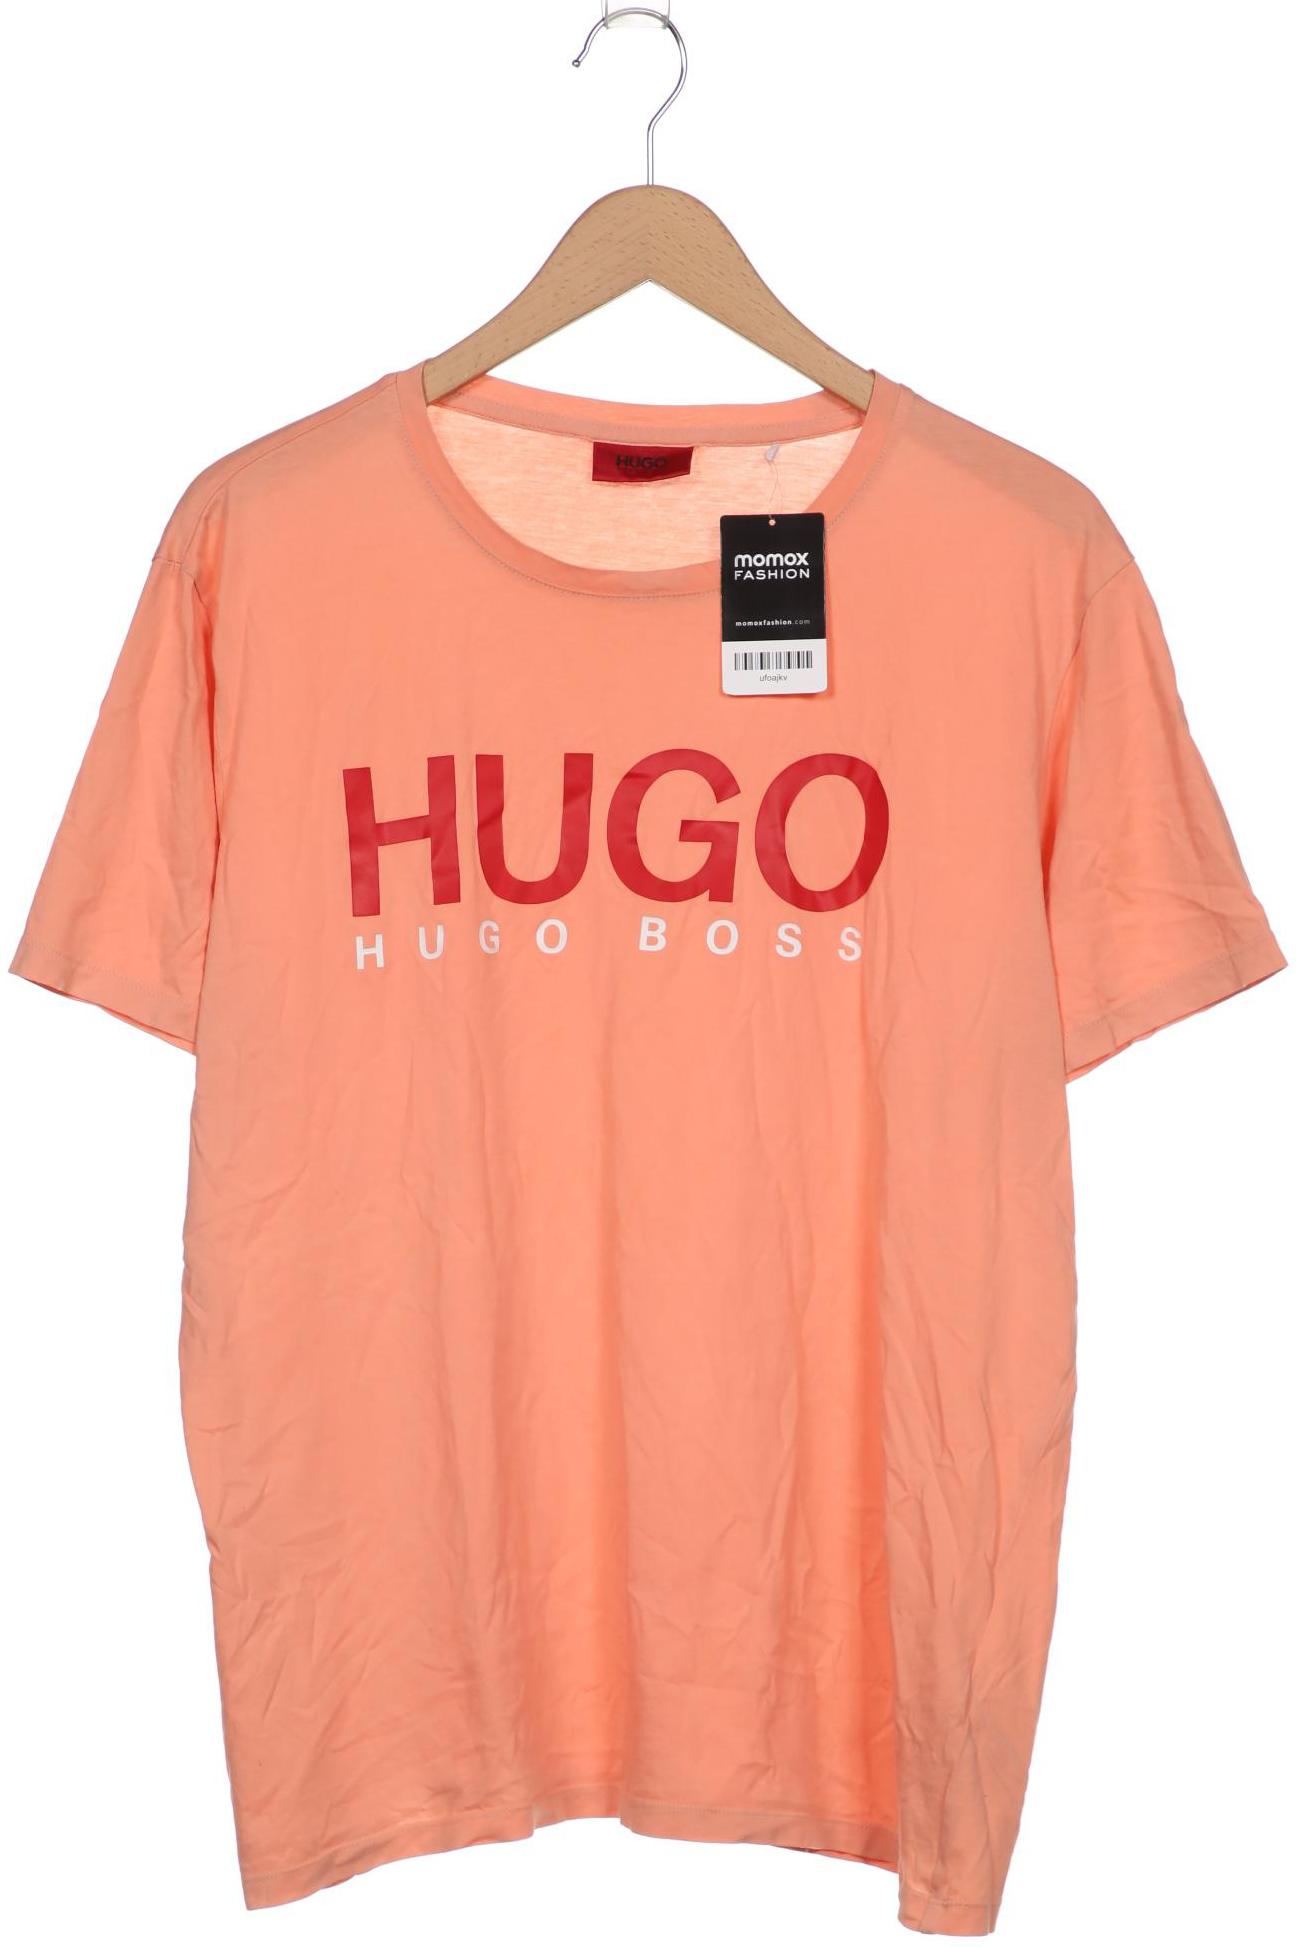 HUGO by Hugo Boss Herren T-Shirt, orange von HUGO by Hugo Boss